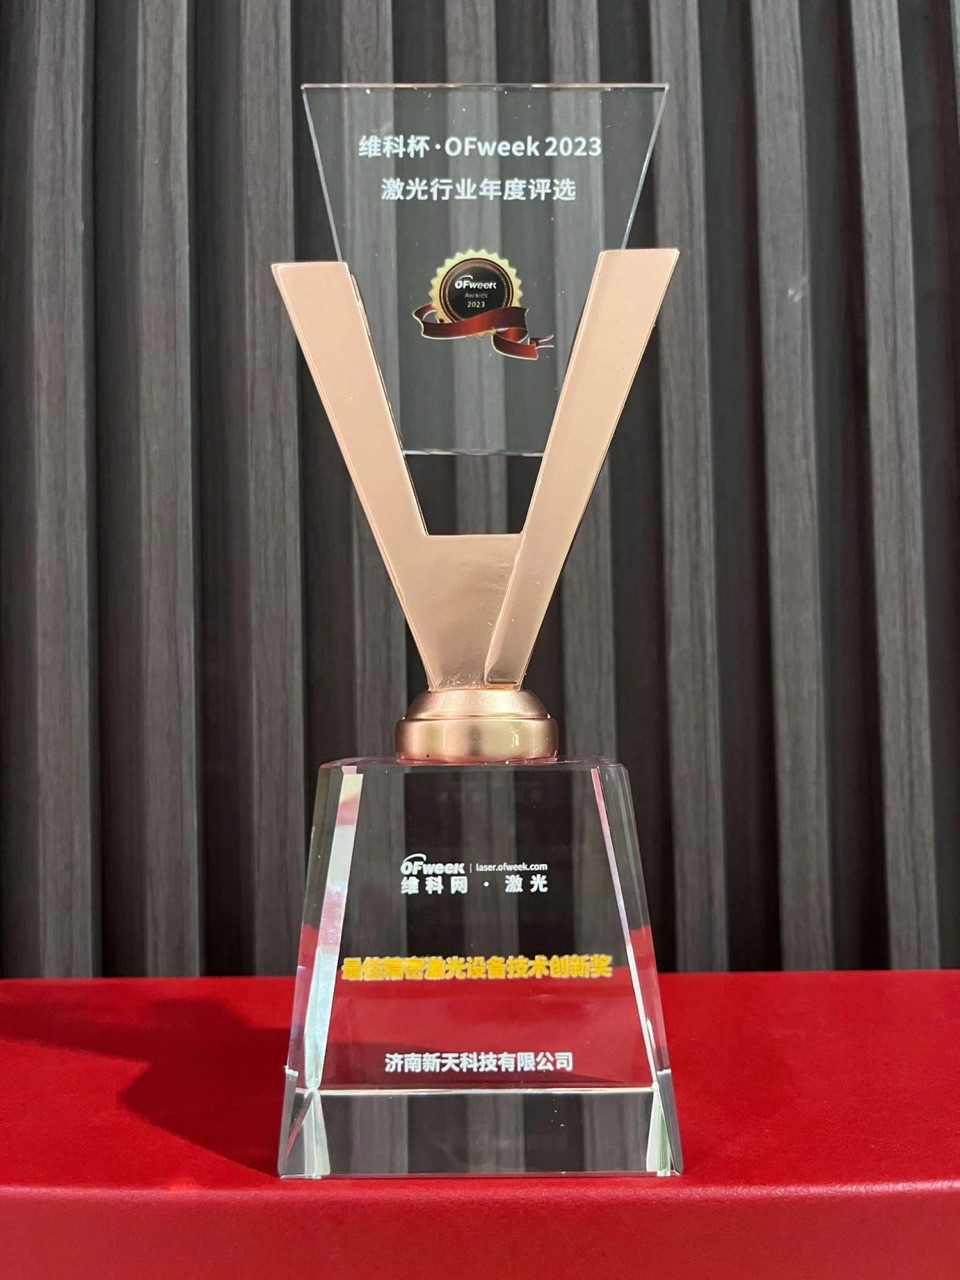 Good news | XT Laser won the VIKO Cup · OFweek 2023 Laser Industry Annual Best Precision Laser Equipment Technology Innovation Award